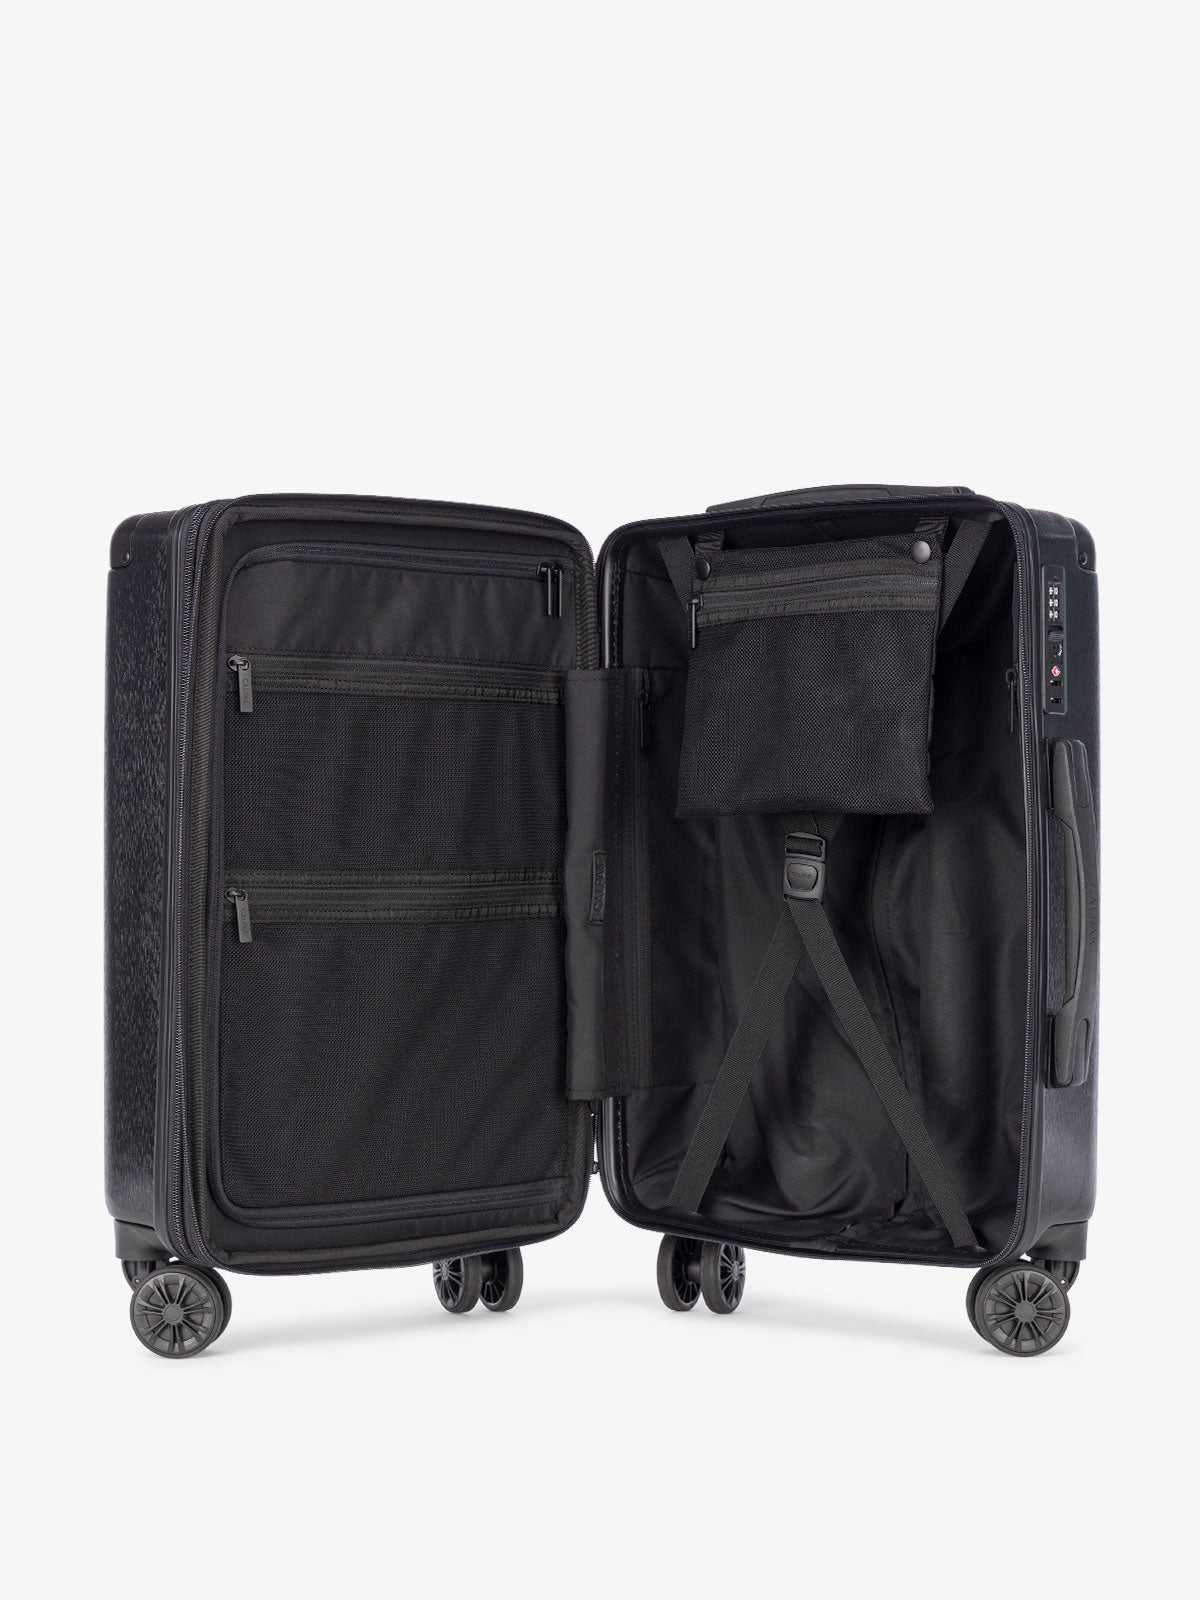 CALPAK Ambeur black big 30 inch luggage with compression straps